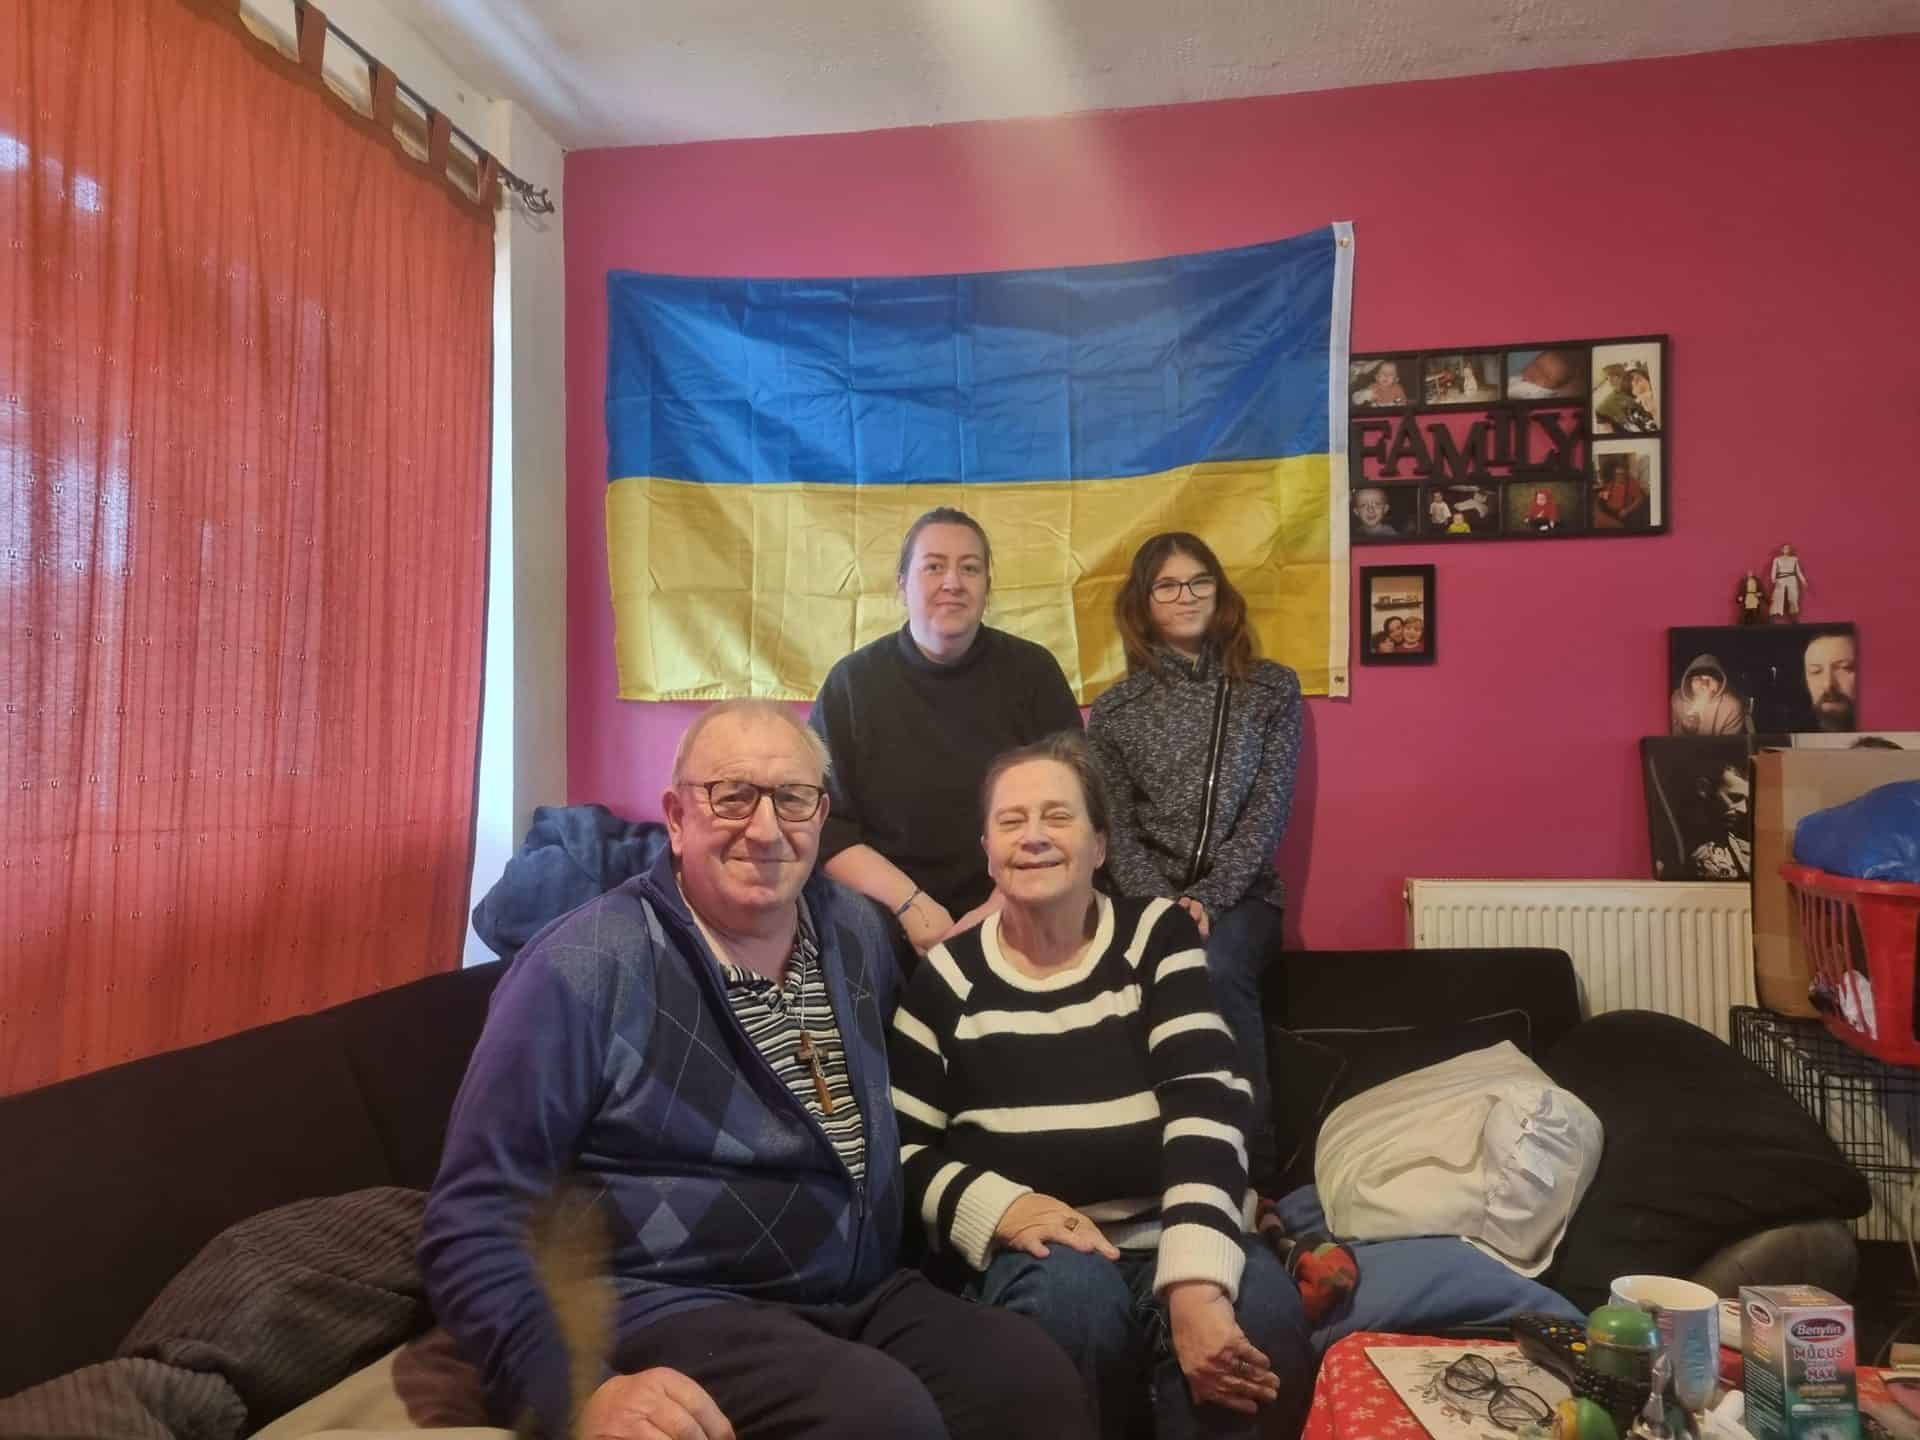 Ukraine: Basildon parents fleeing warzone reunited with family in Essex